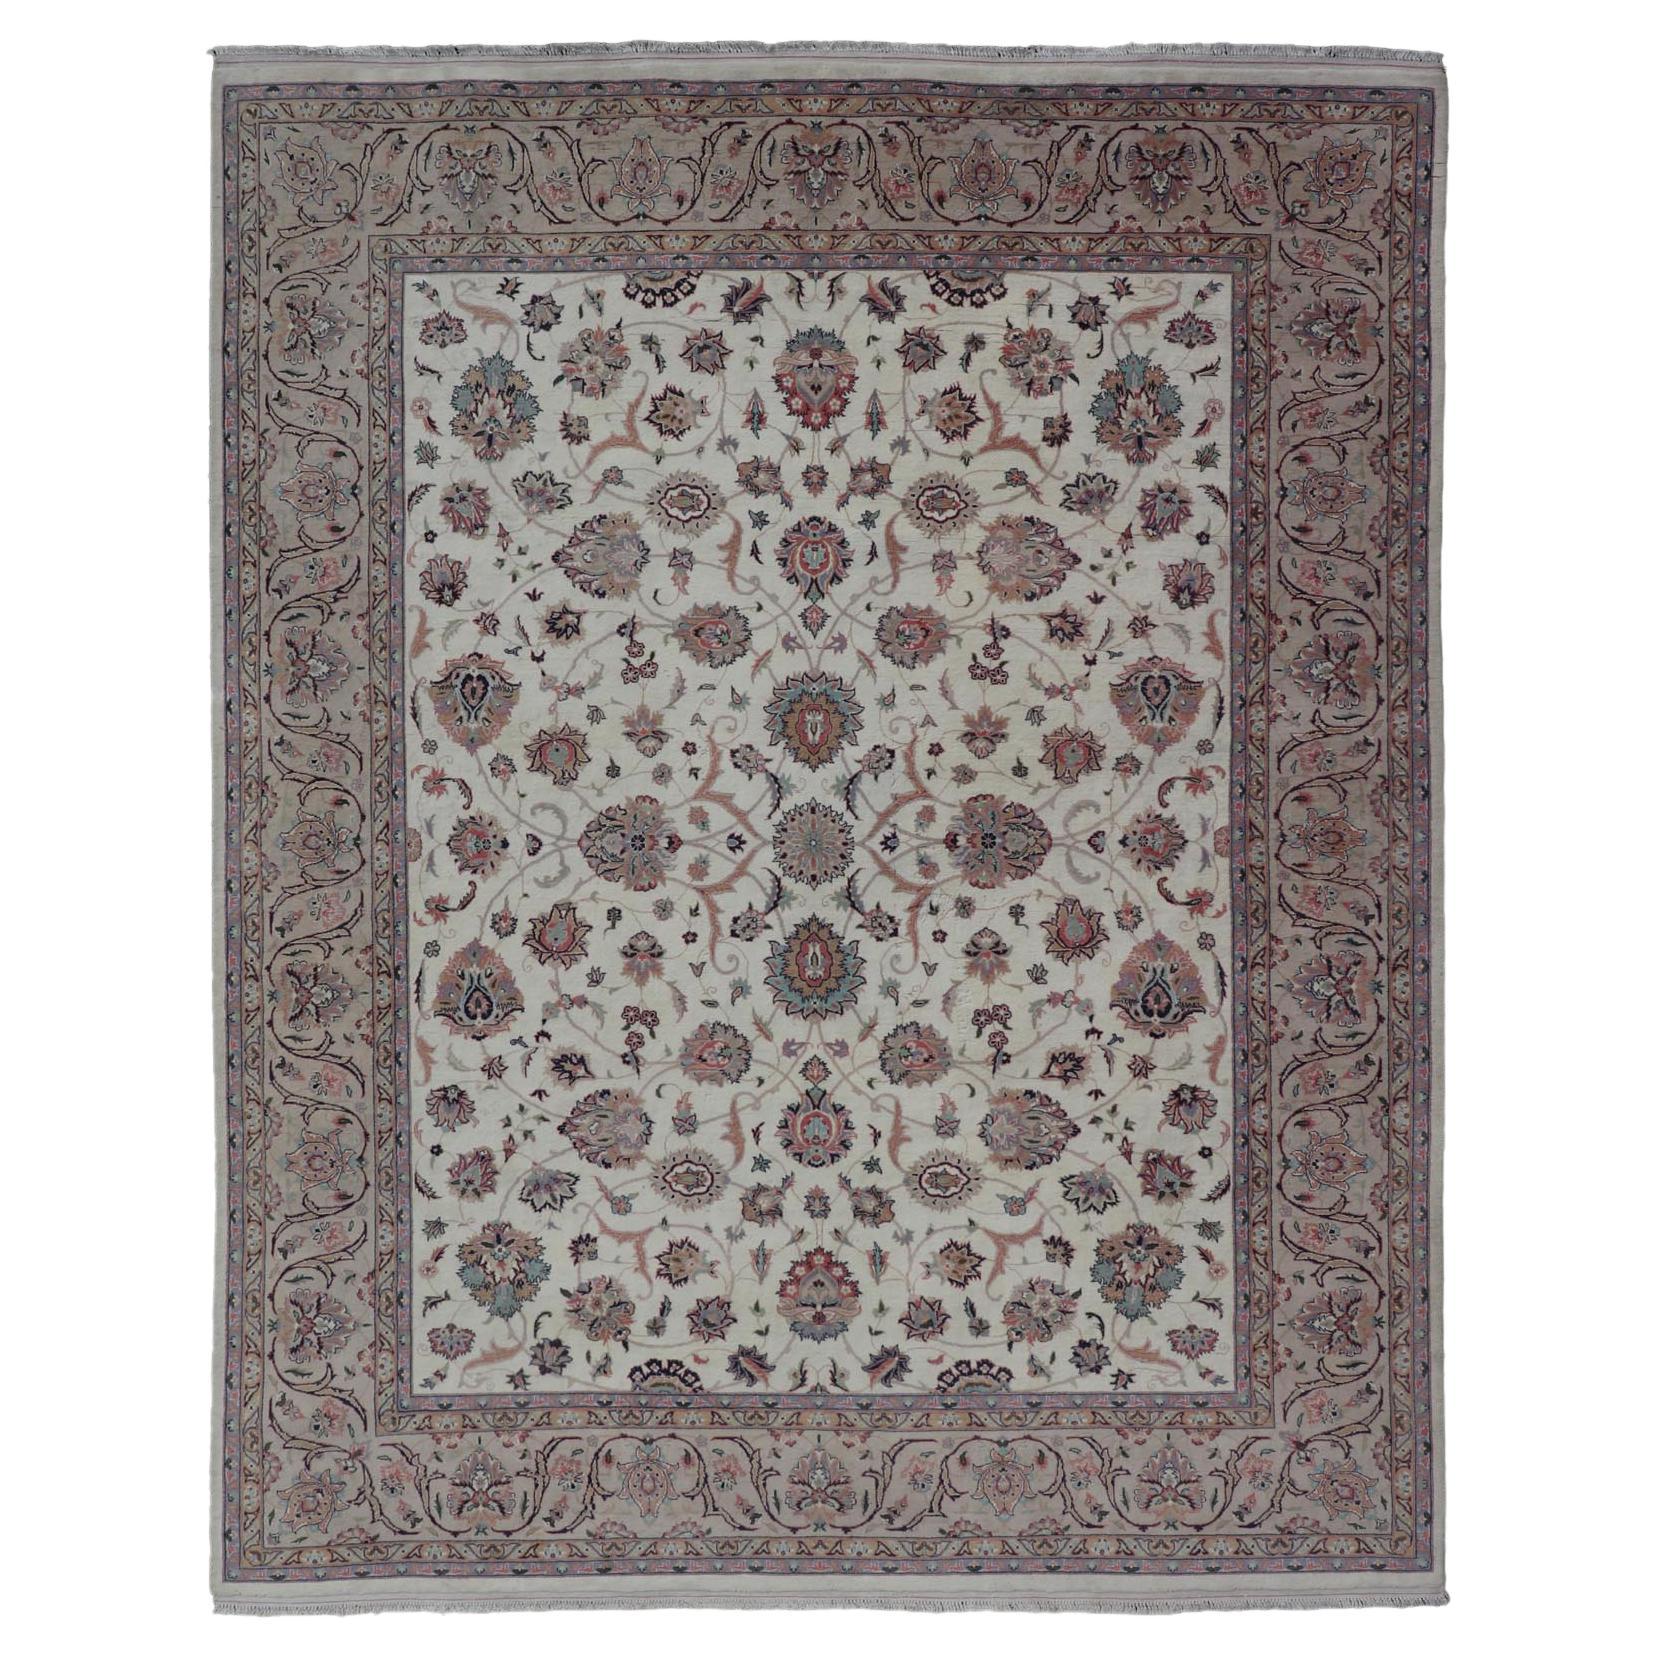 All-Over Floral Design Vintage Persian Tabriz Rug in Soft Colors on Ivory Field 